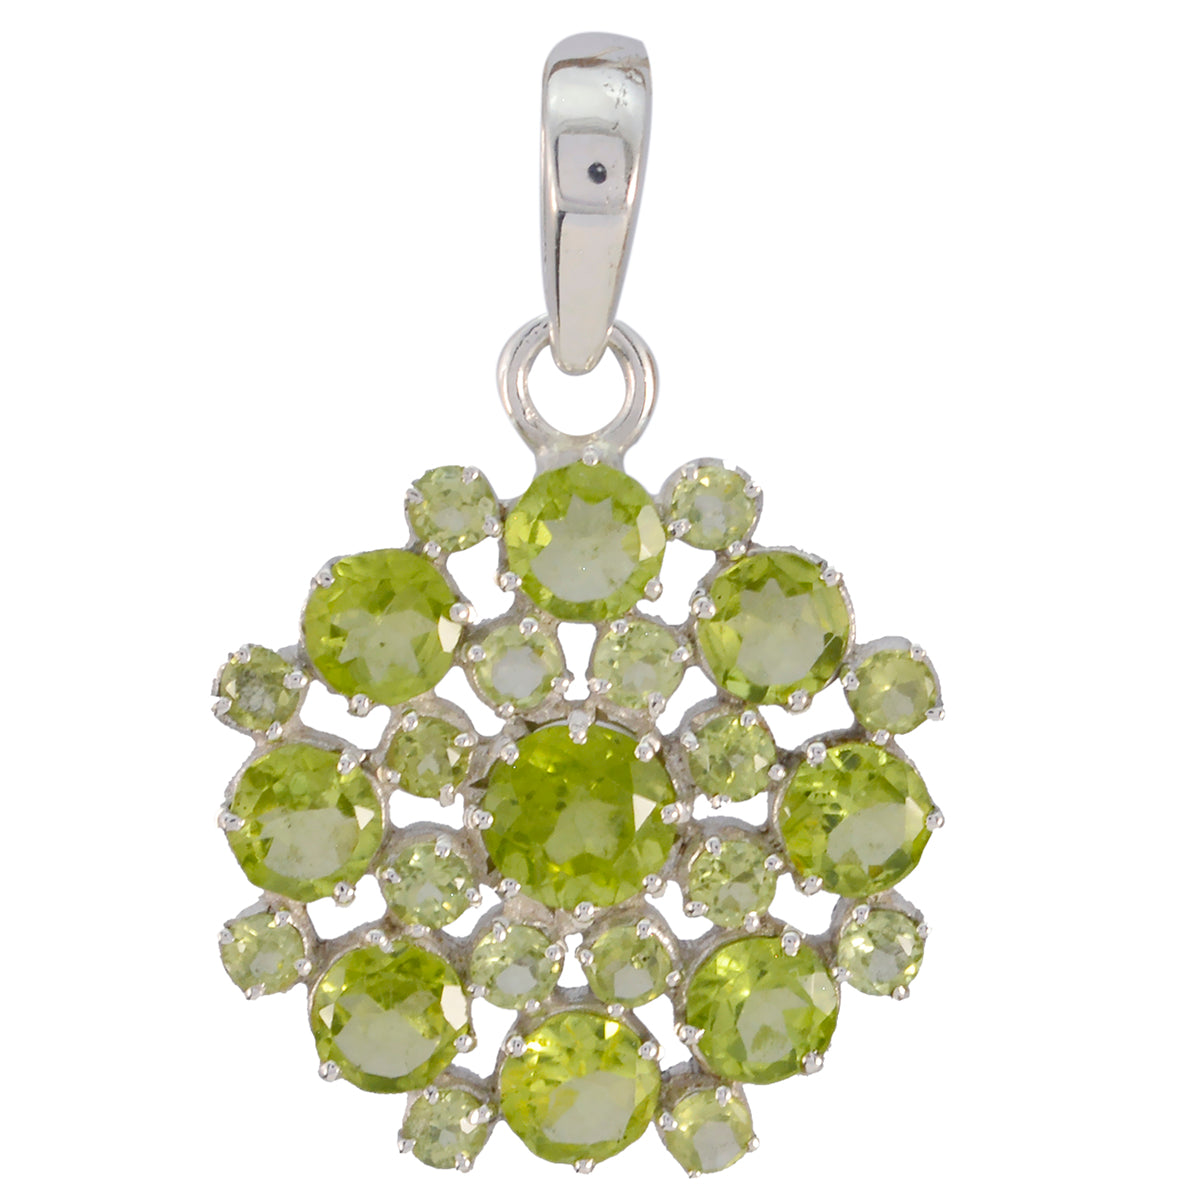 Riyo Natural Gemstone Round Faceted Green Peridot Solid Silver Pendant b' day gift